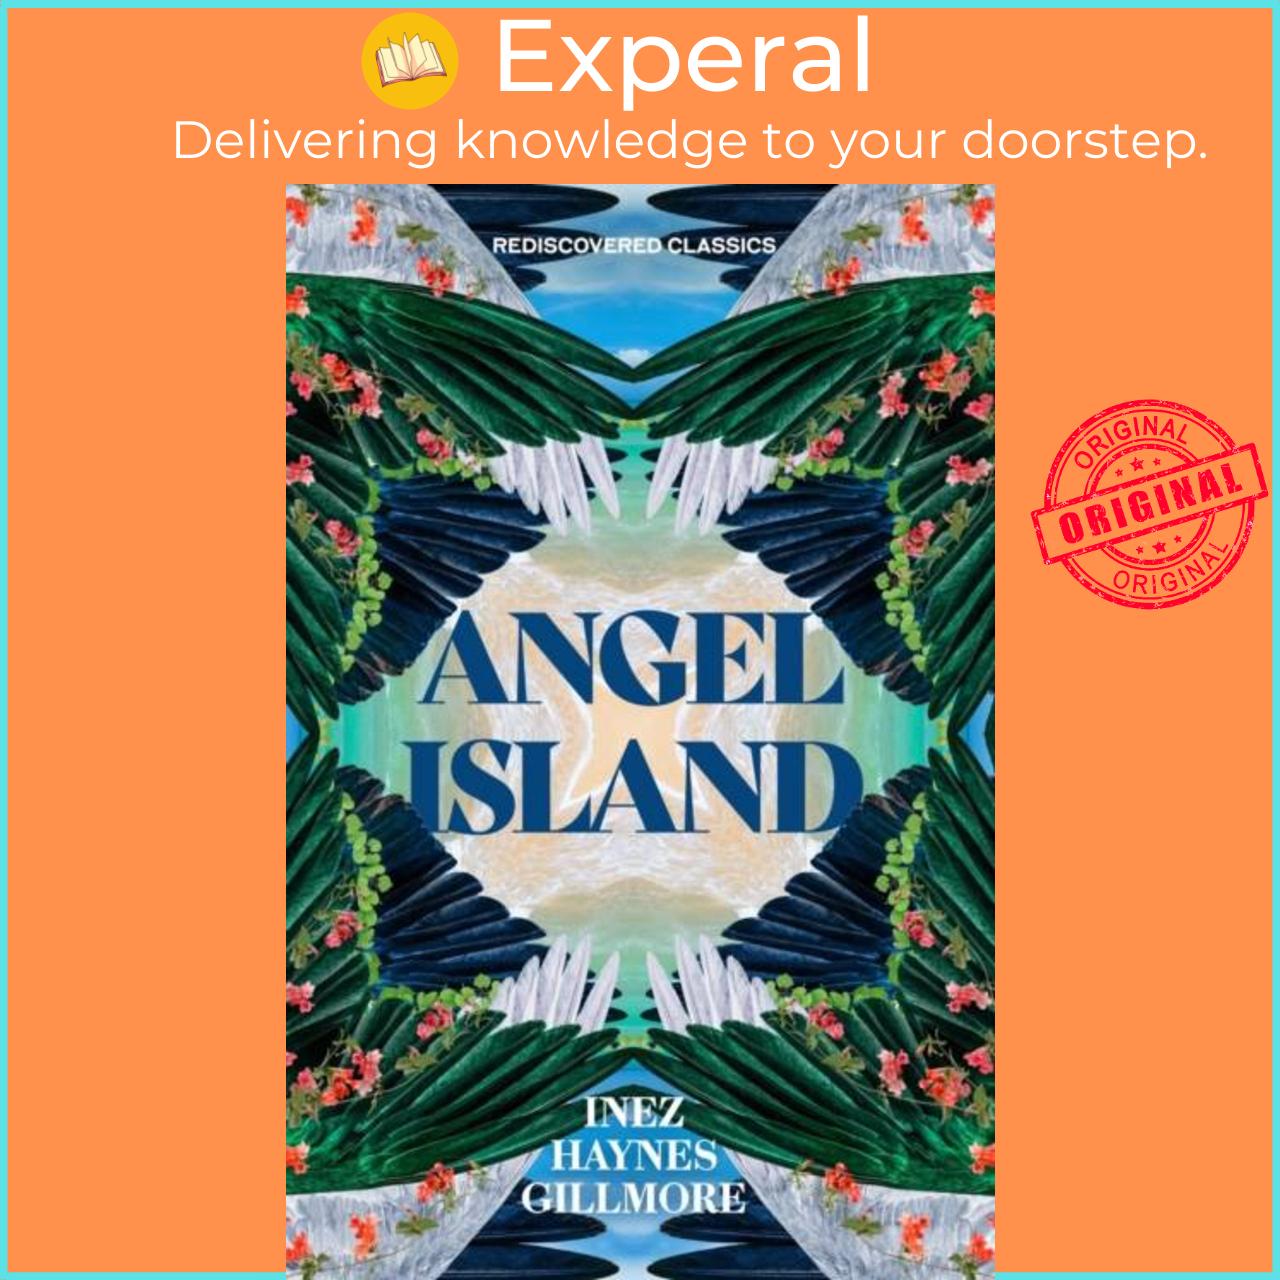 Sách - Angel Island by Inez Haynes Gillmore (UK edition, paperback)